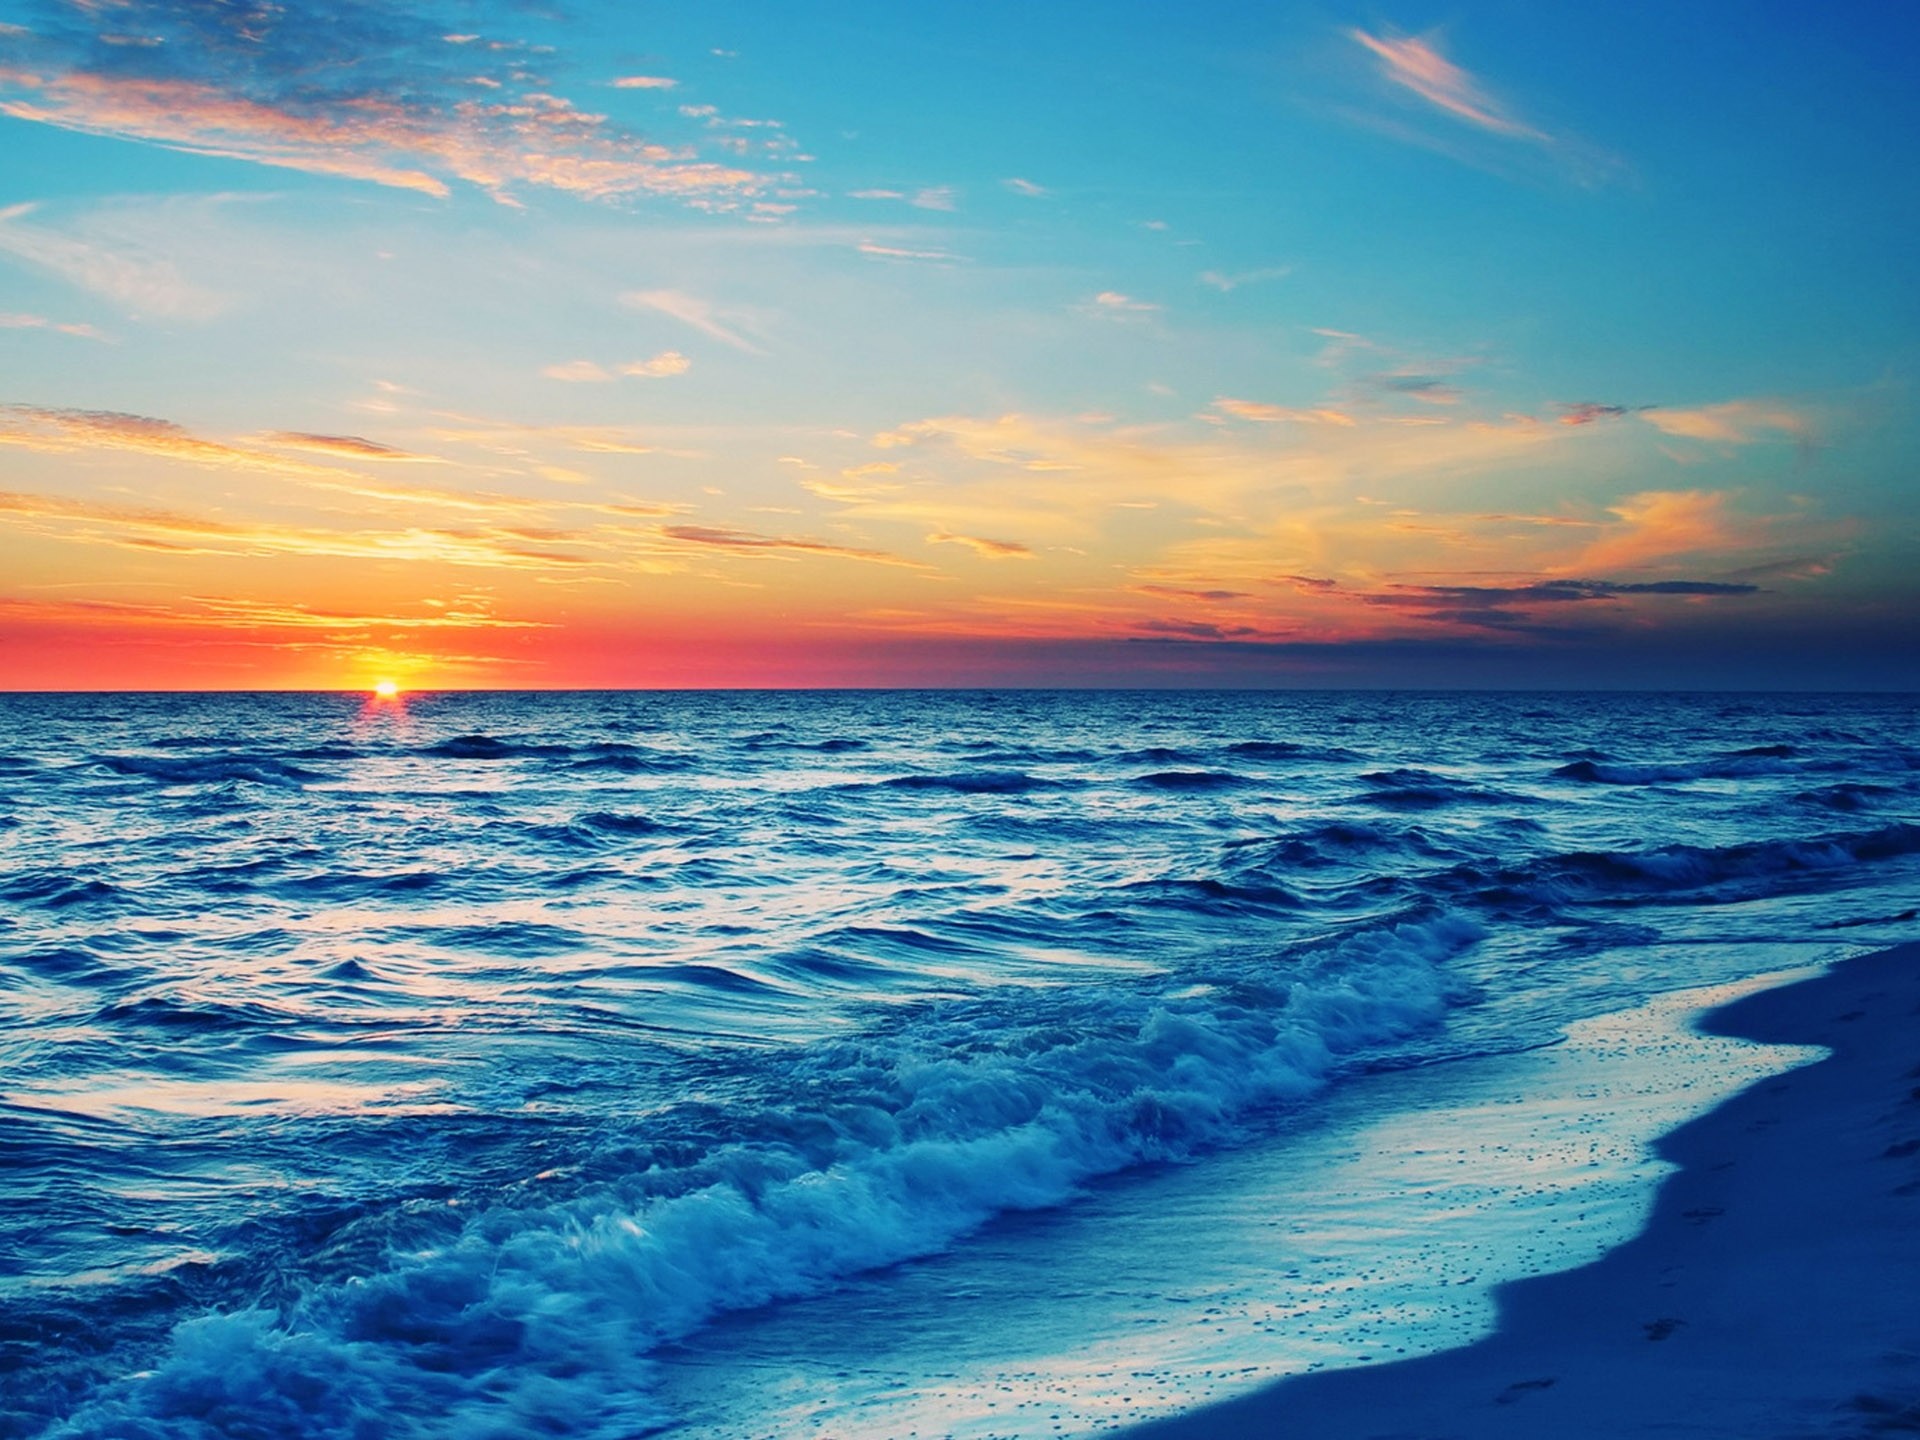 ocean scenery wallpaper,sky,horizon,body of water,sea,ocean